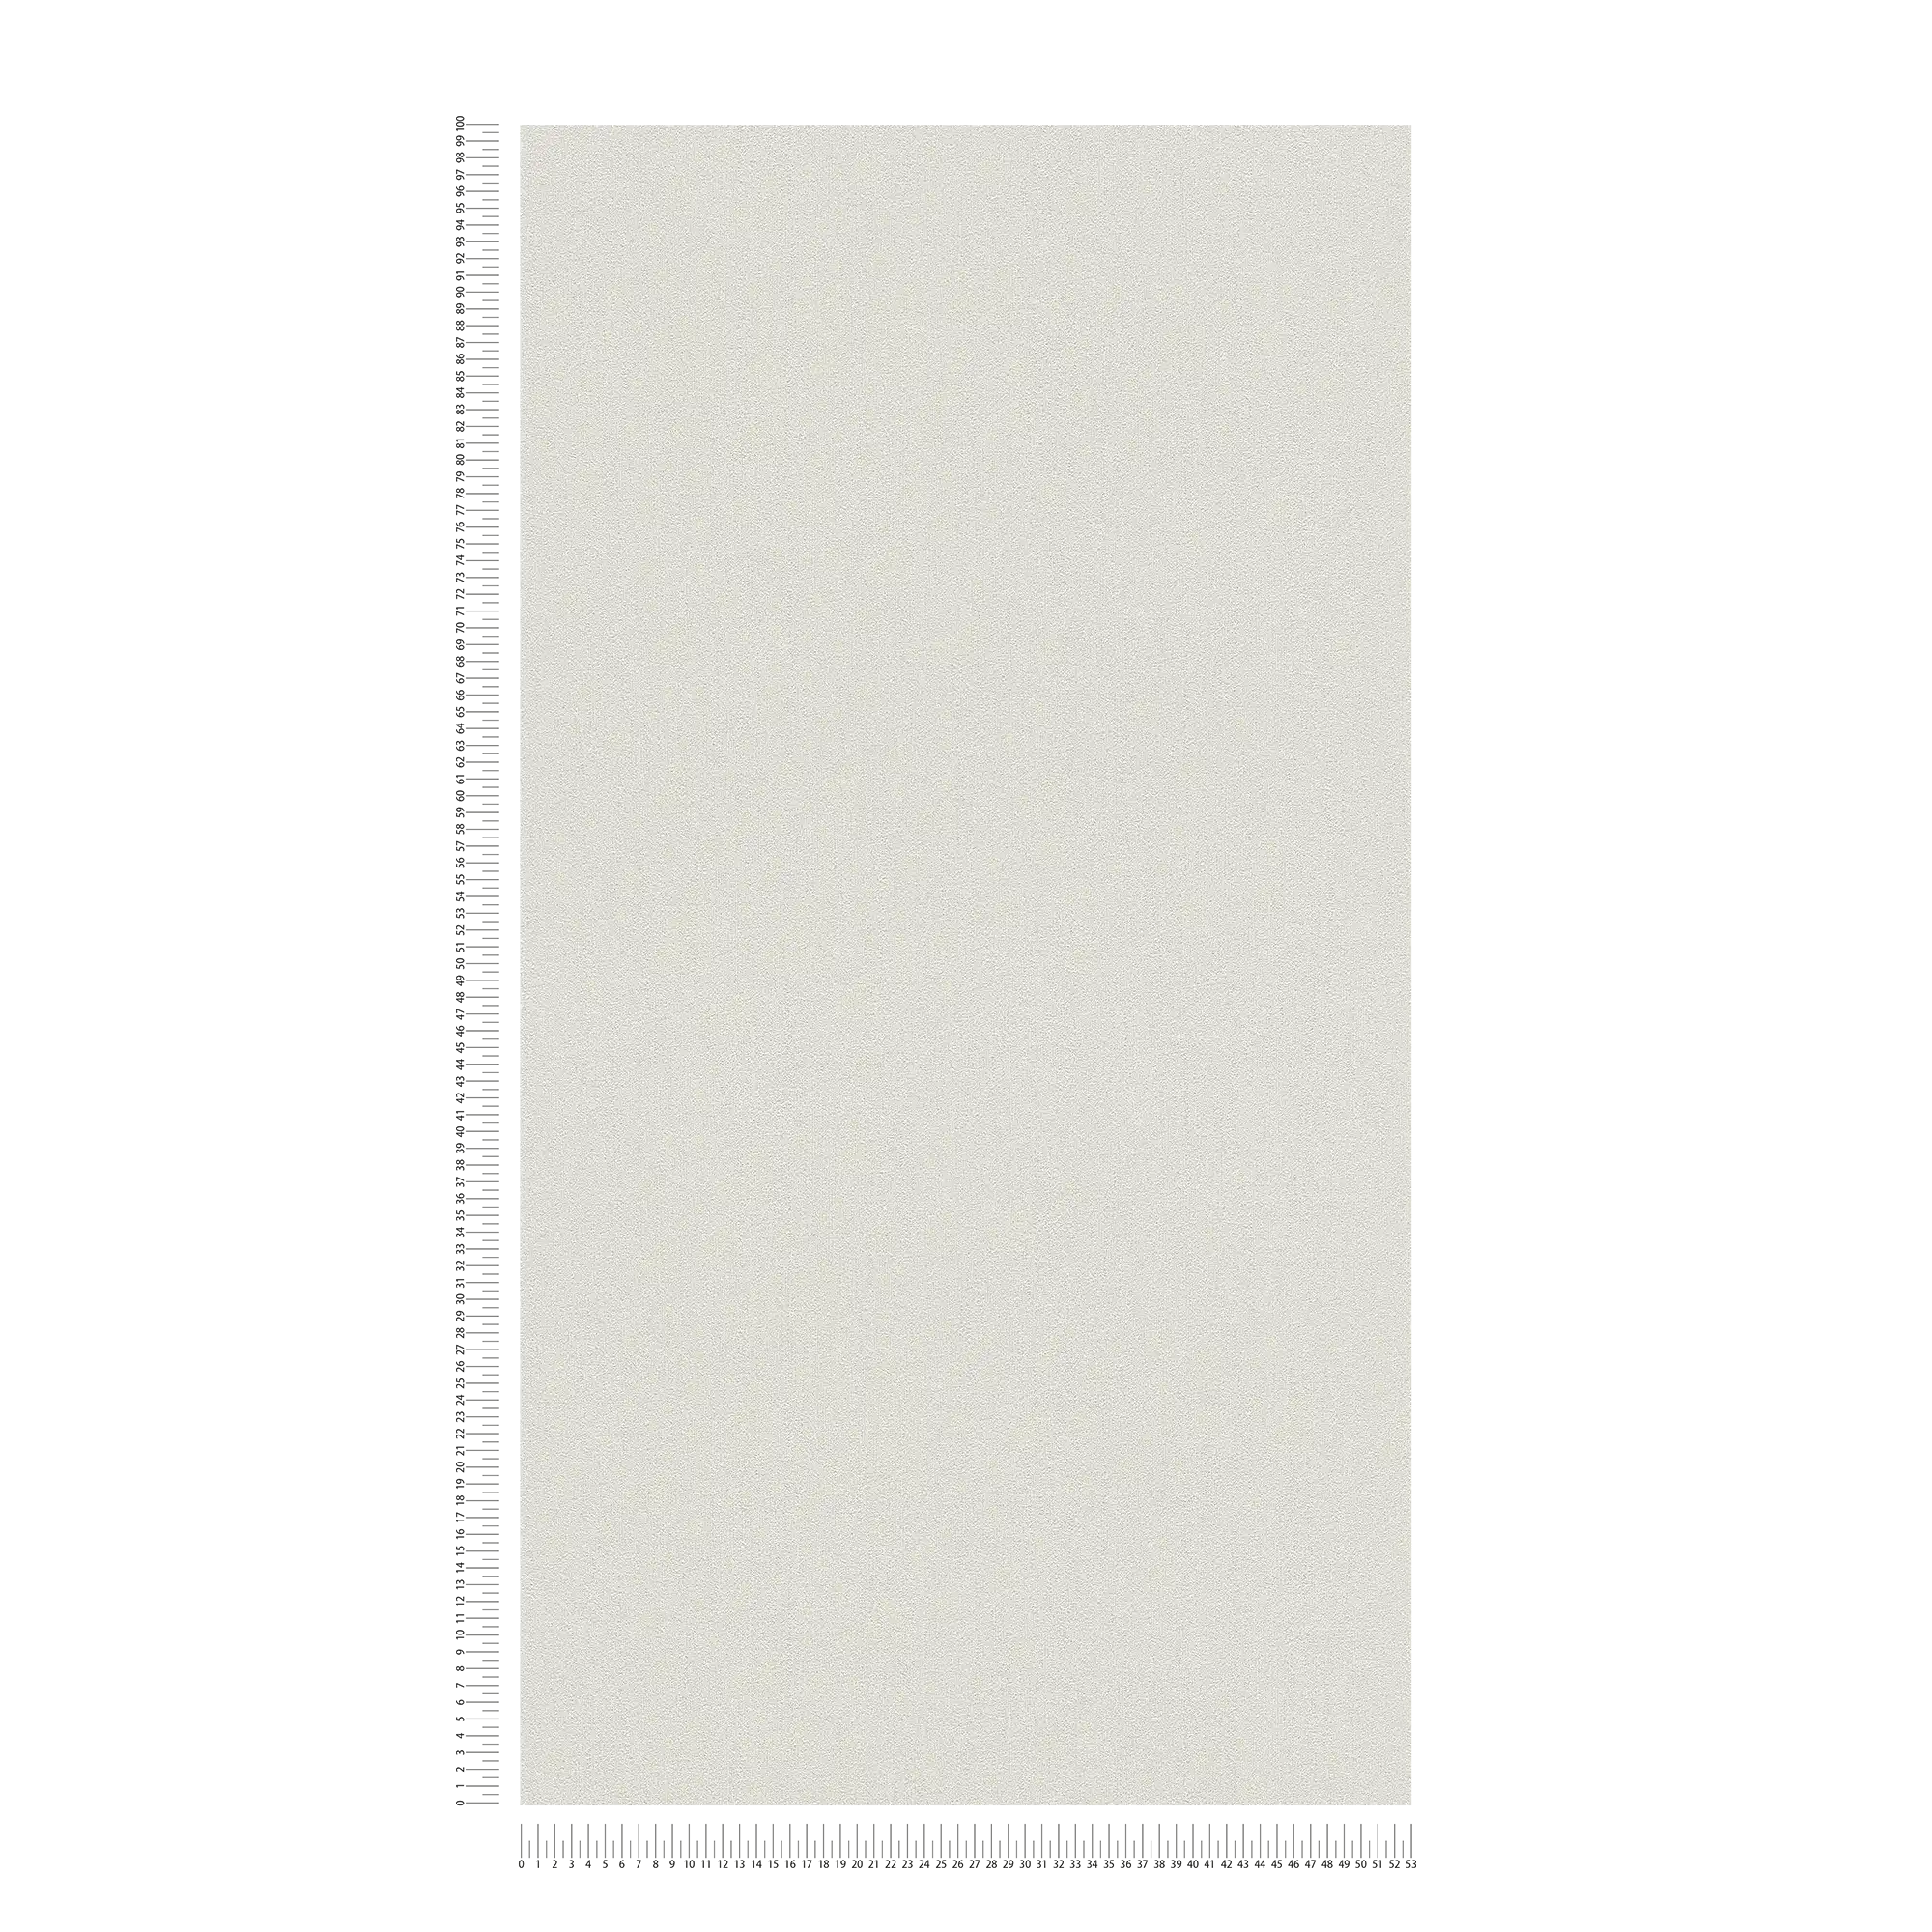             Papel pintado Karl LAGERFELD con textura en relieve - gris, blanco
        